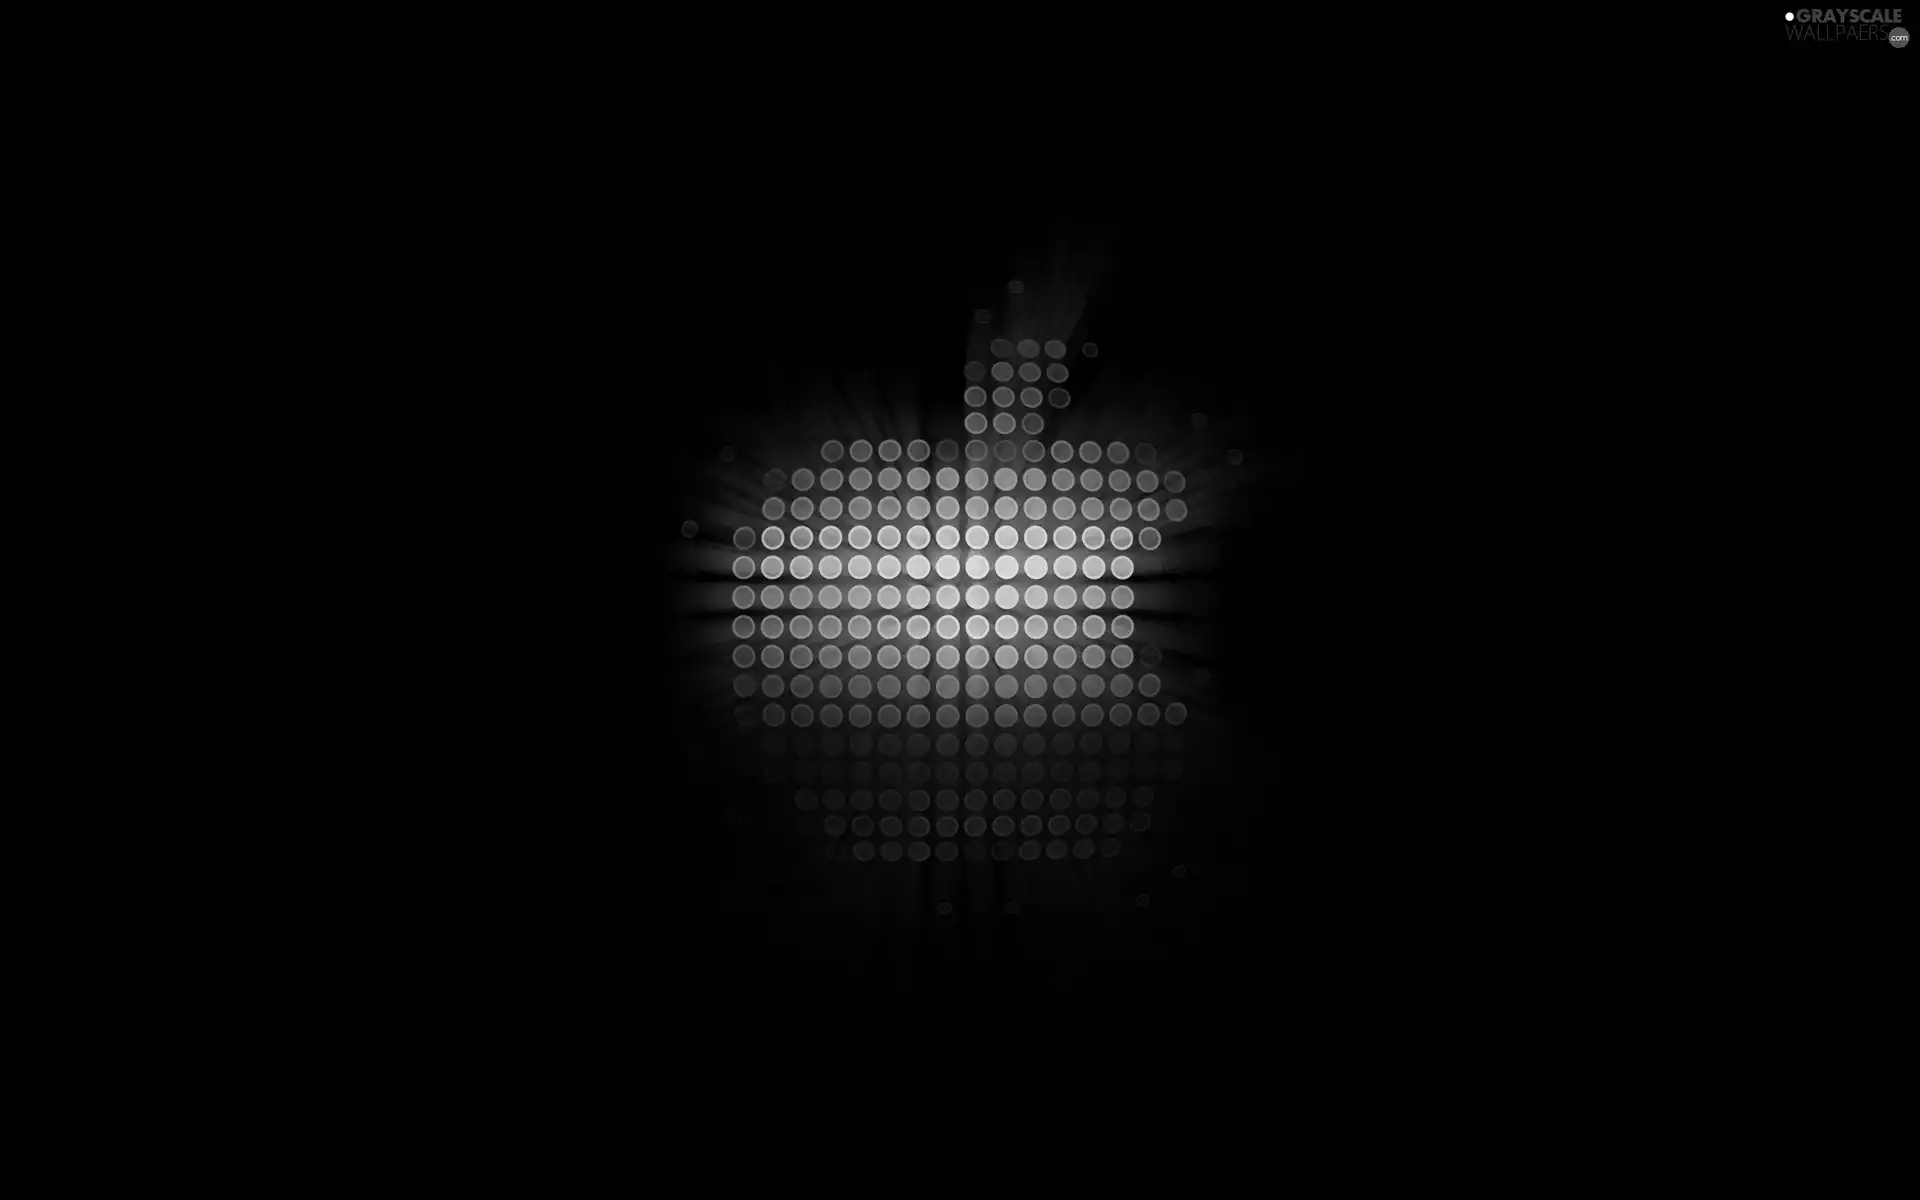 Apple, neon, logo